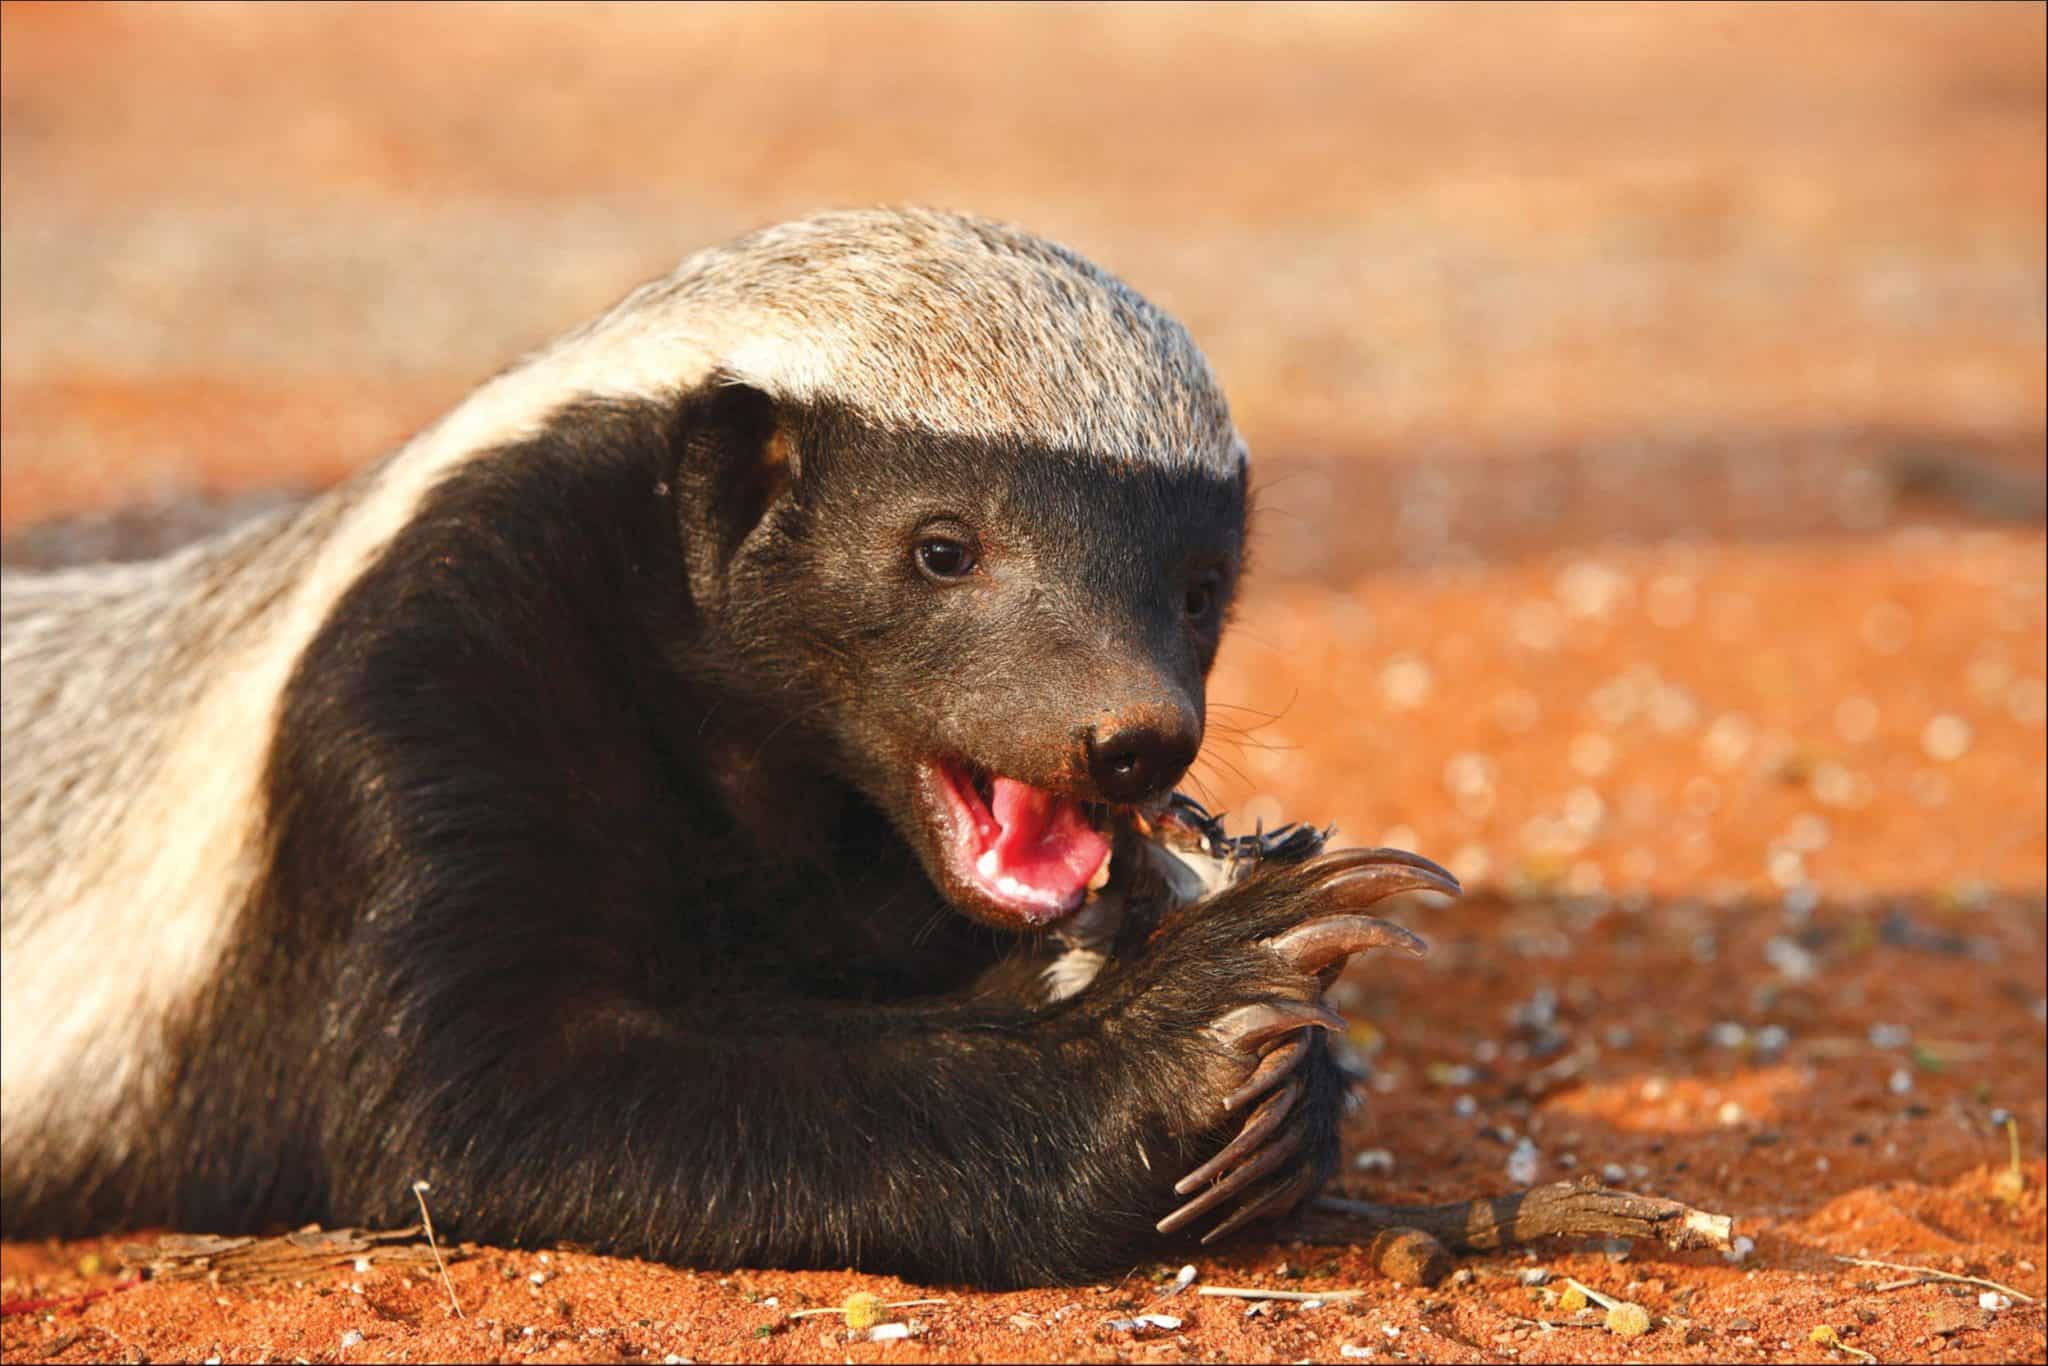 Honey badger eating a snack